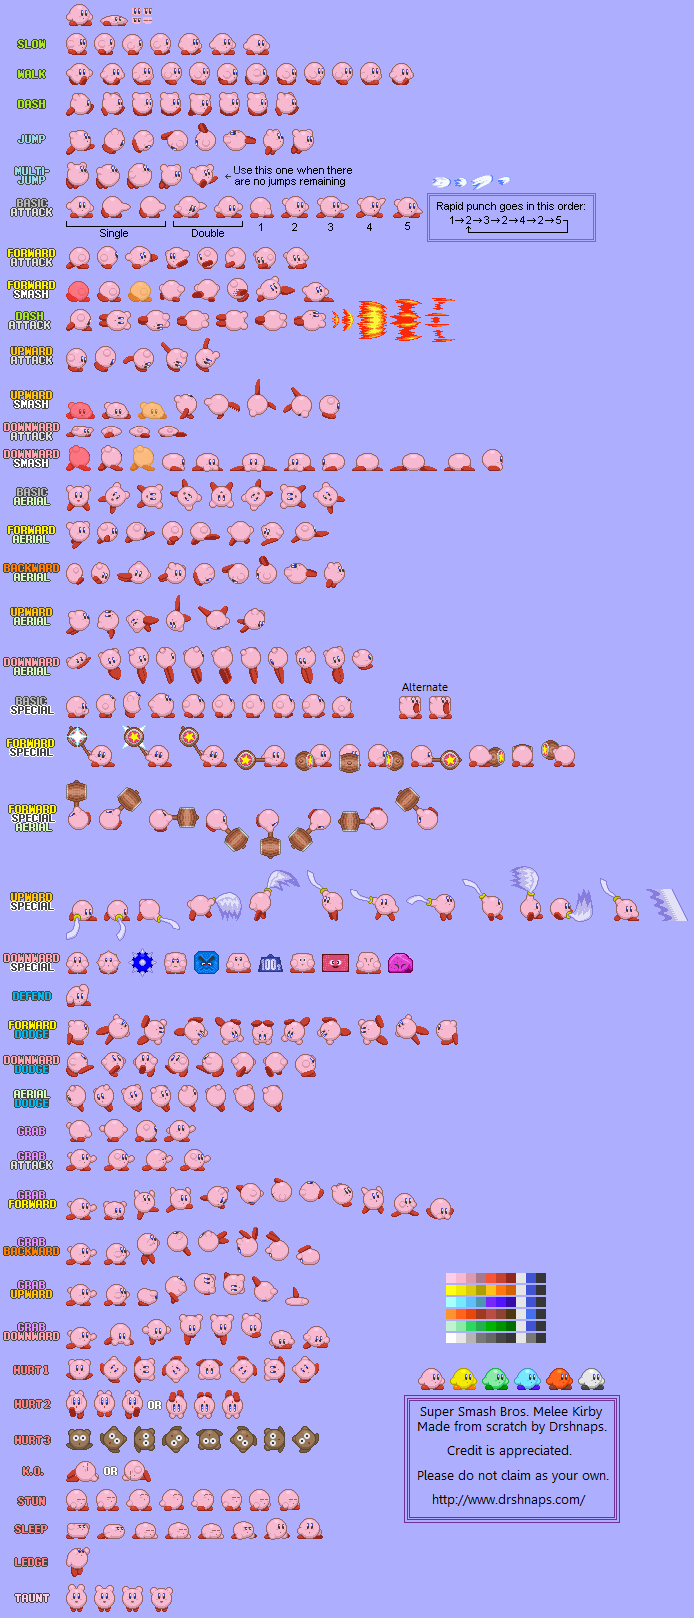 Custom / Edited - Super Smash Bros. Customs - Kirby - The Spriters Resource